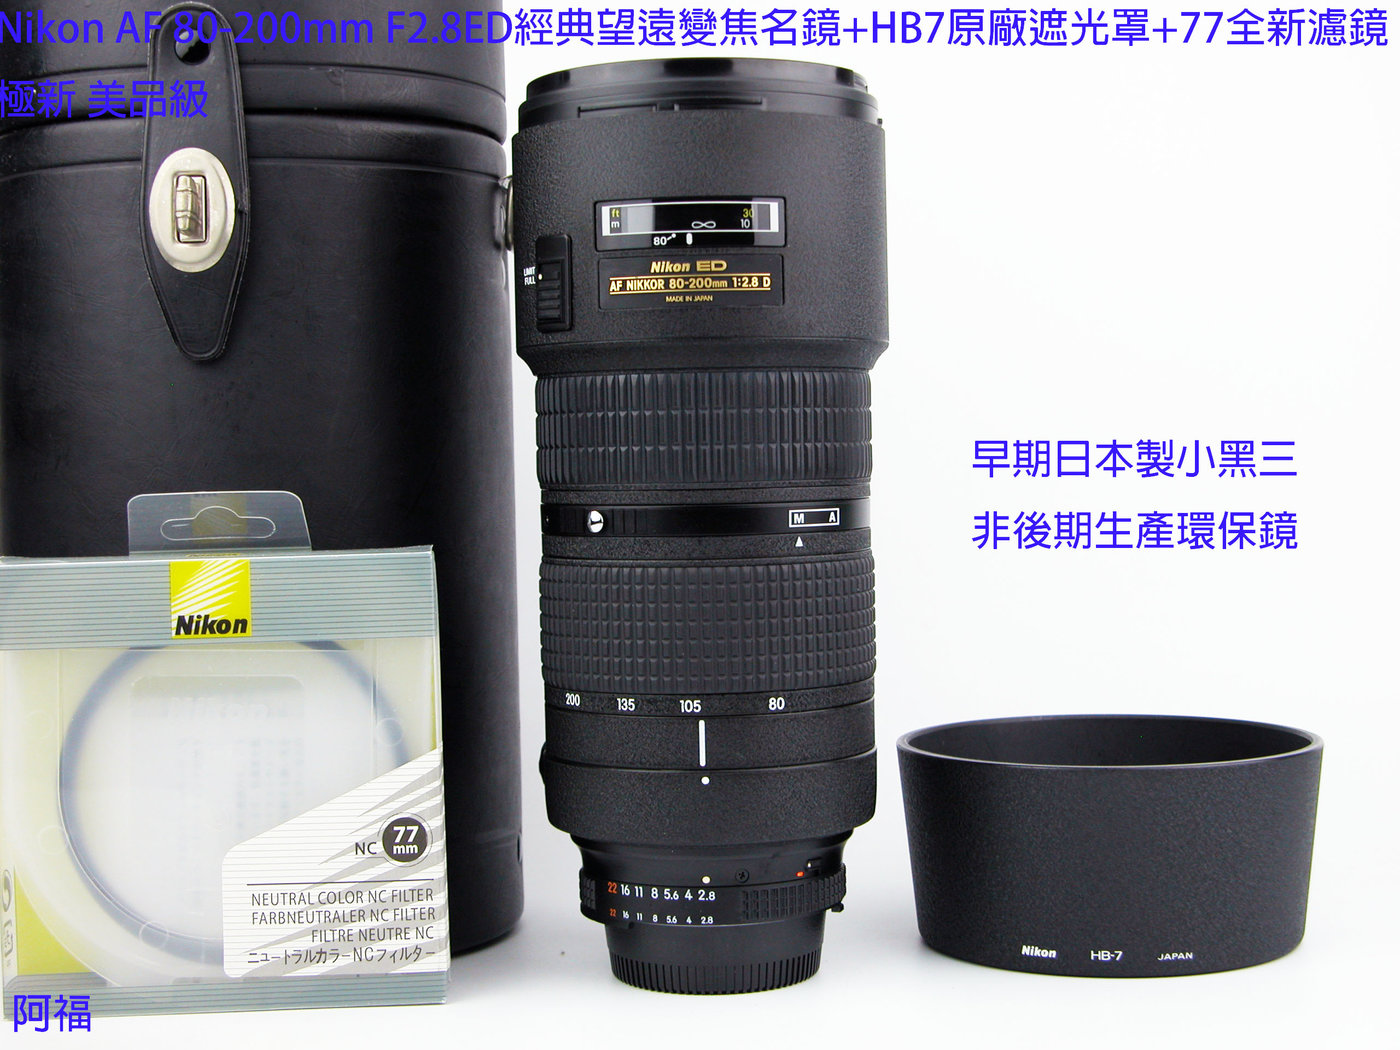 Nikon AF 80-200mm F2.8 ED小黑三經典望遠變焦名鏡+HB7原廠遮光